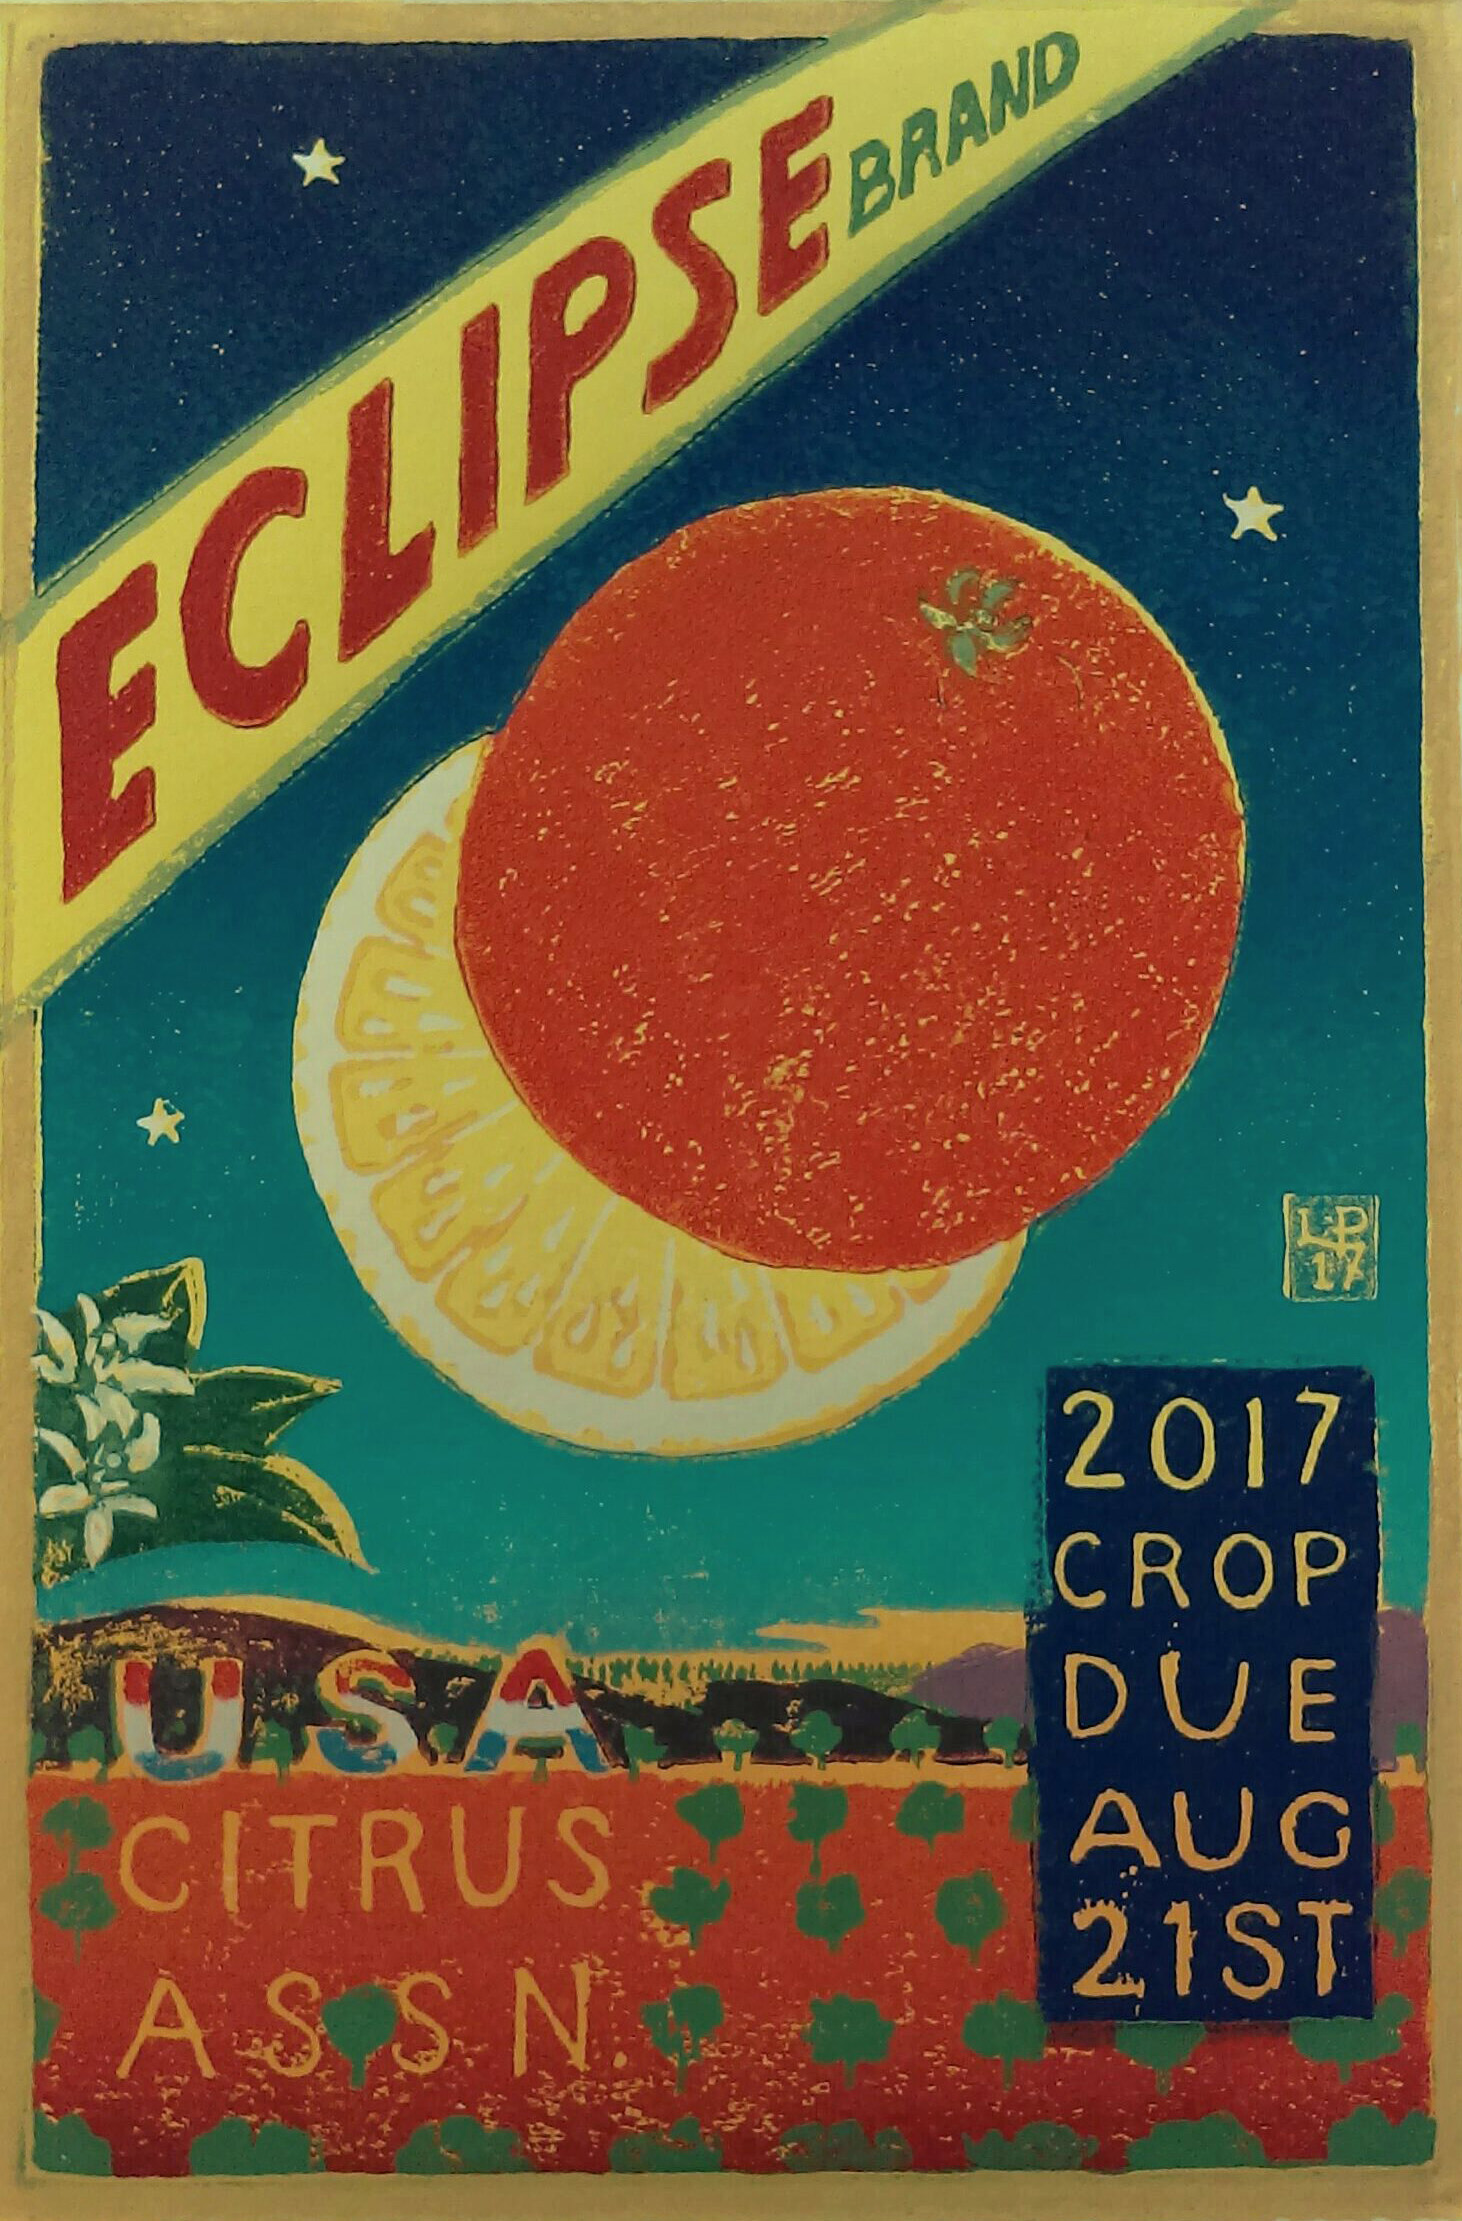 Eclipse Brand Citrus